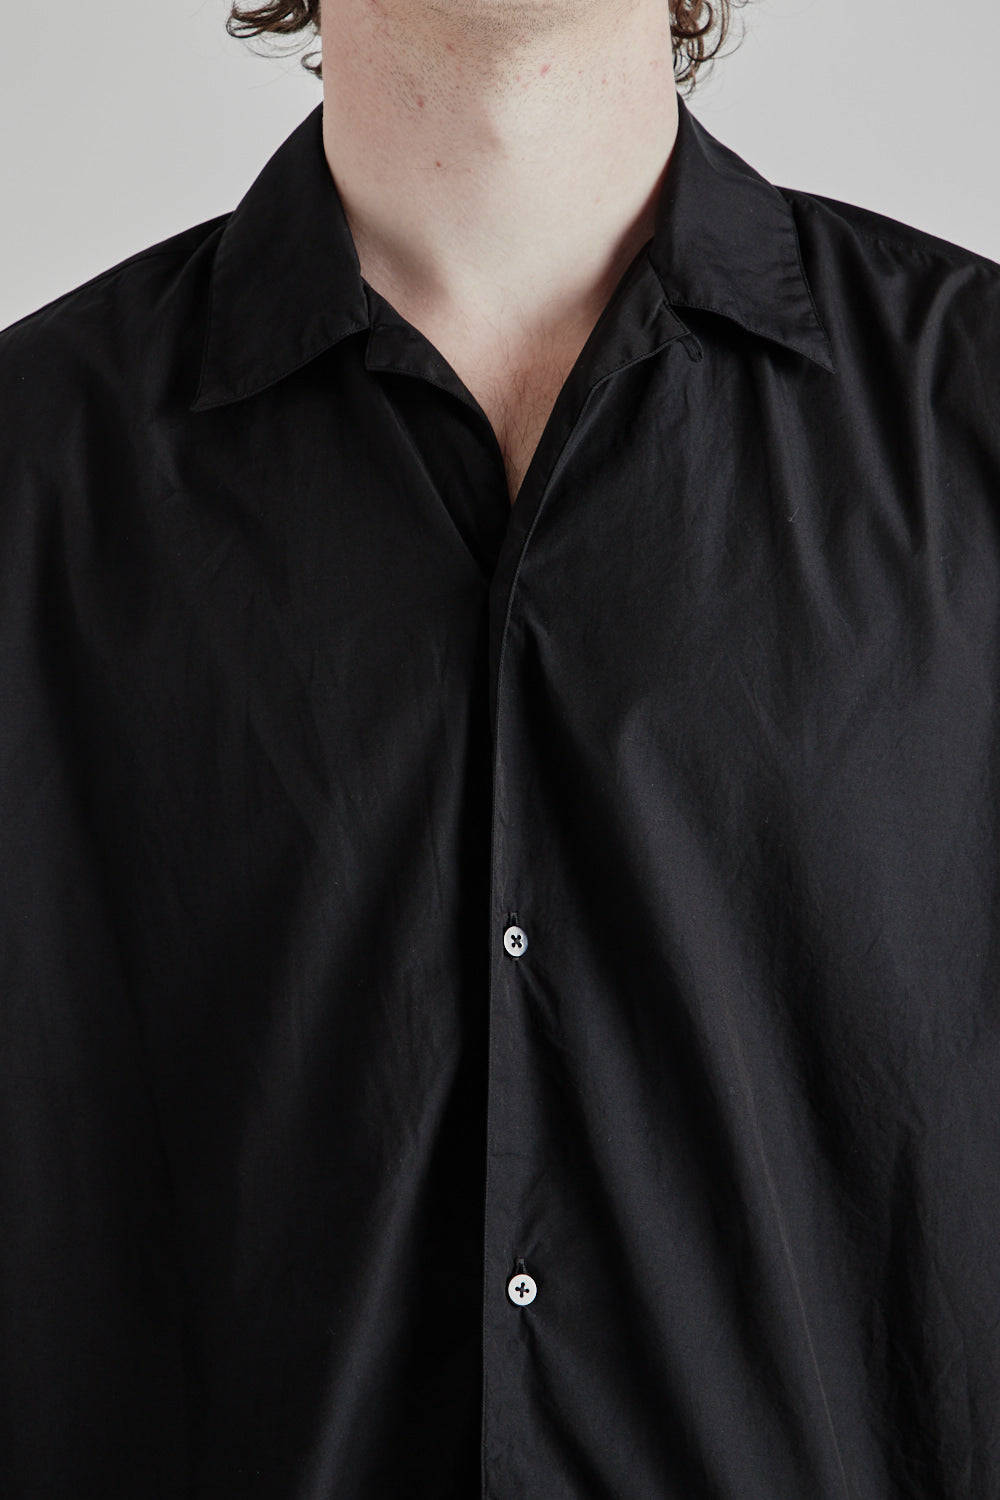 Blurhms Chambray Open Collar Shirt in Black